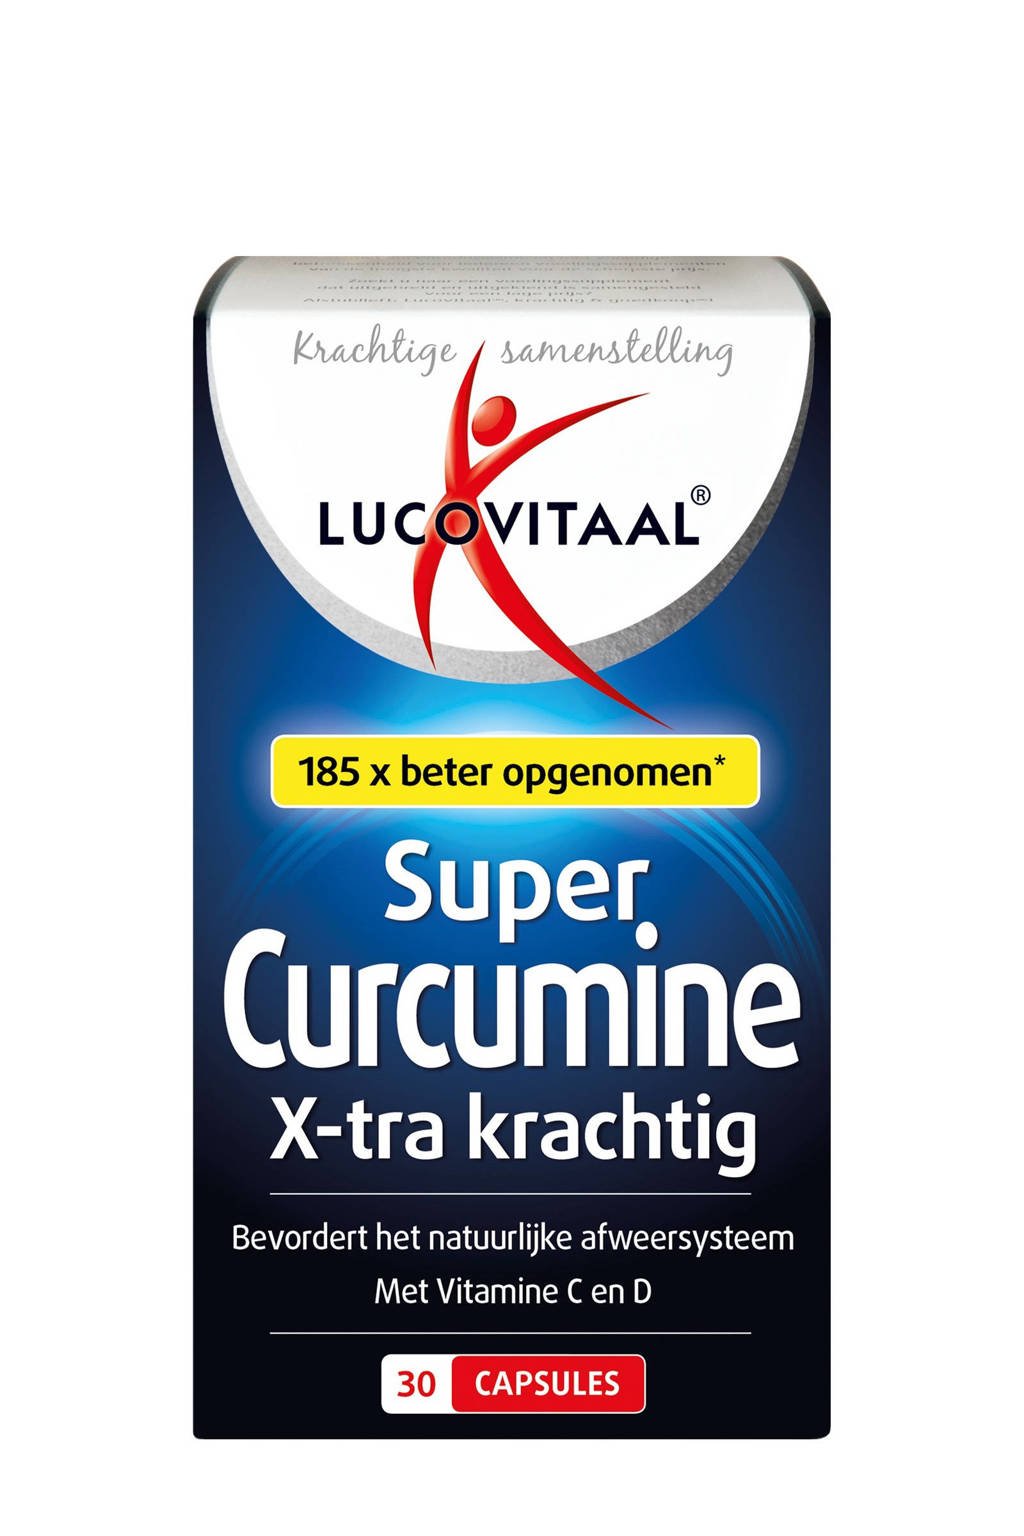 Lucovitaal Curcumine Super X-tra Krachtig - 30 capsules